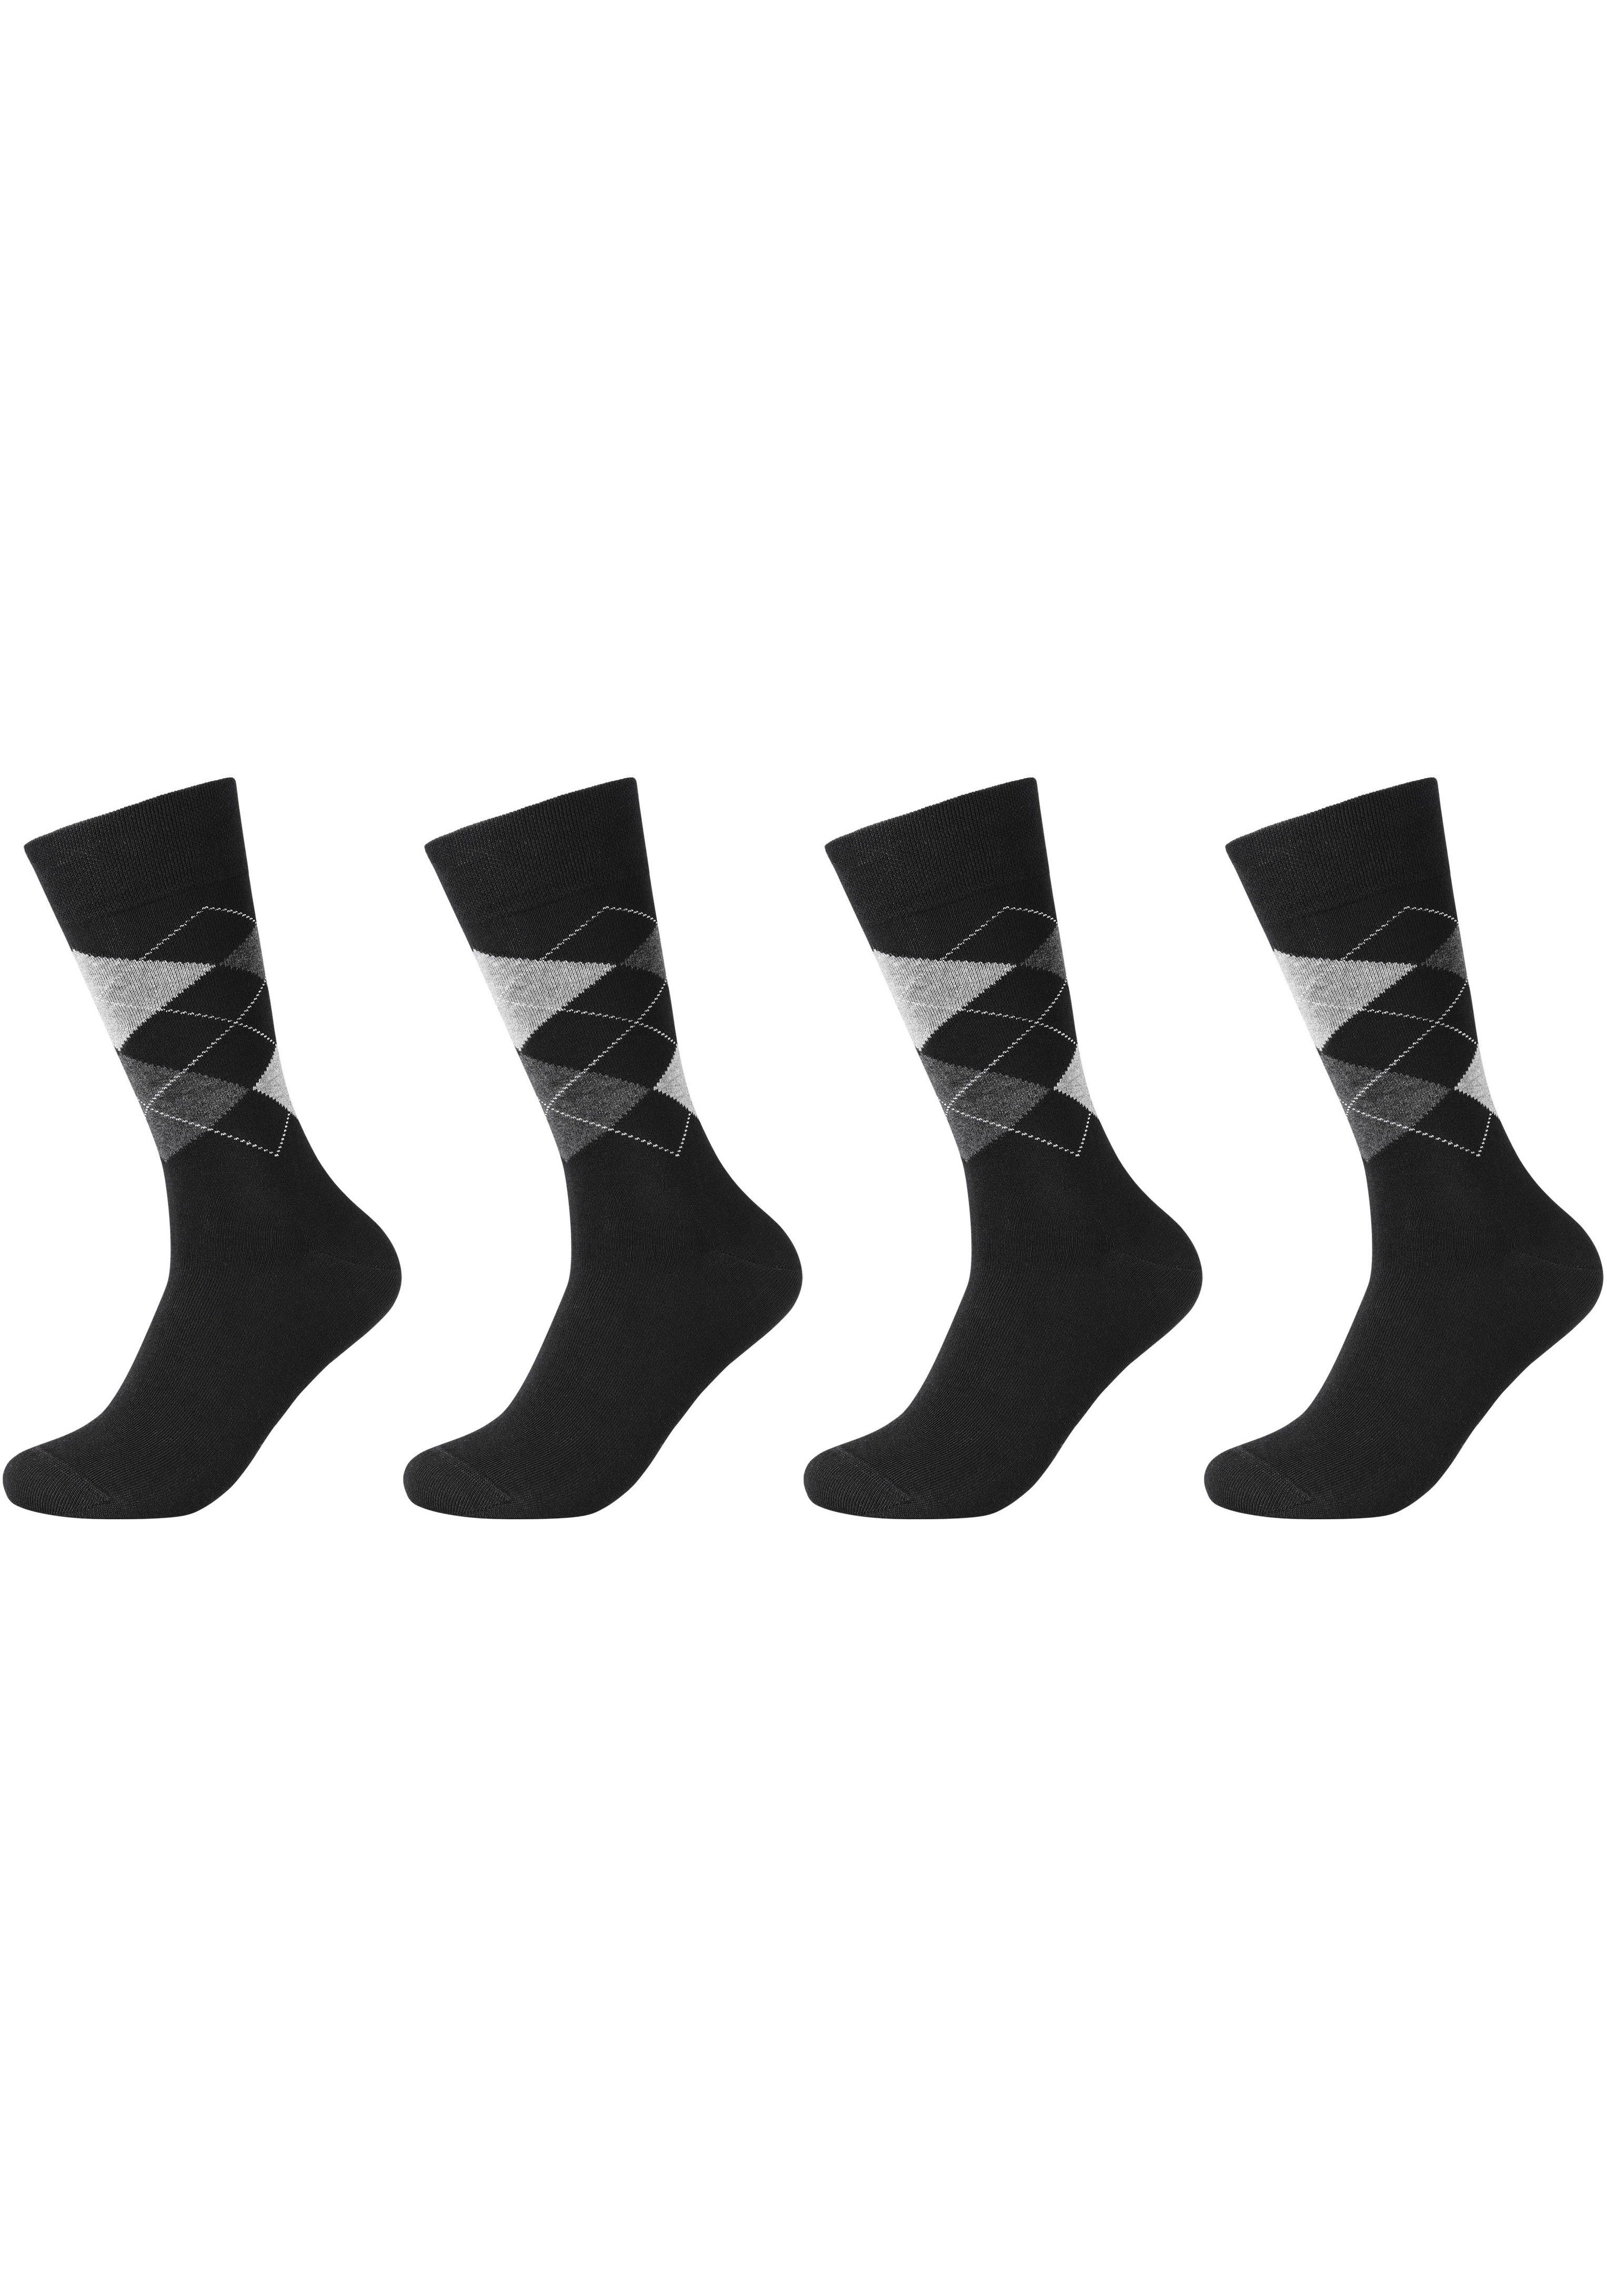 Camano Socken (Packung, 4-Paar) Faltenfreier Tragekomfort dank Elasthan-Anteil schwarz